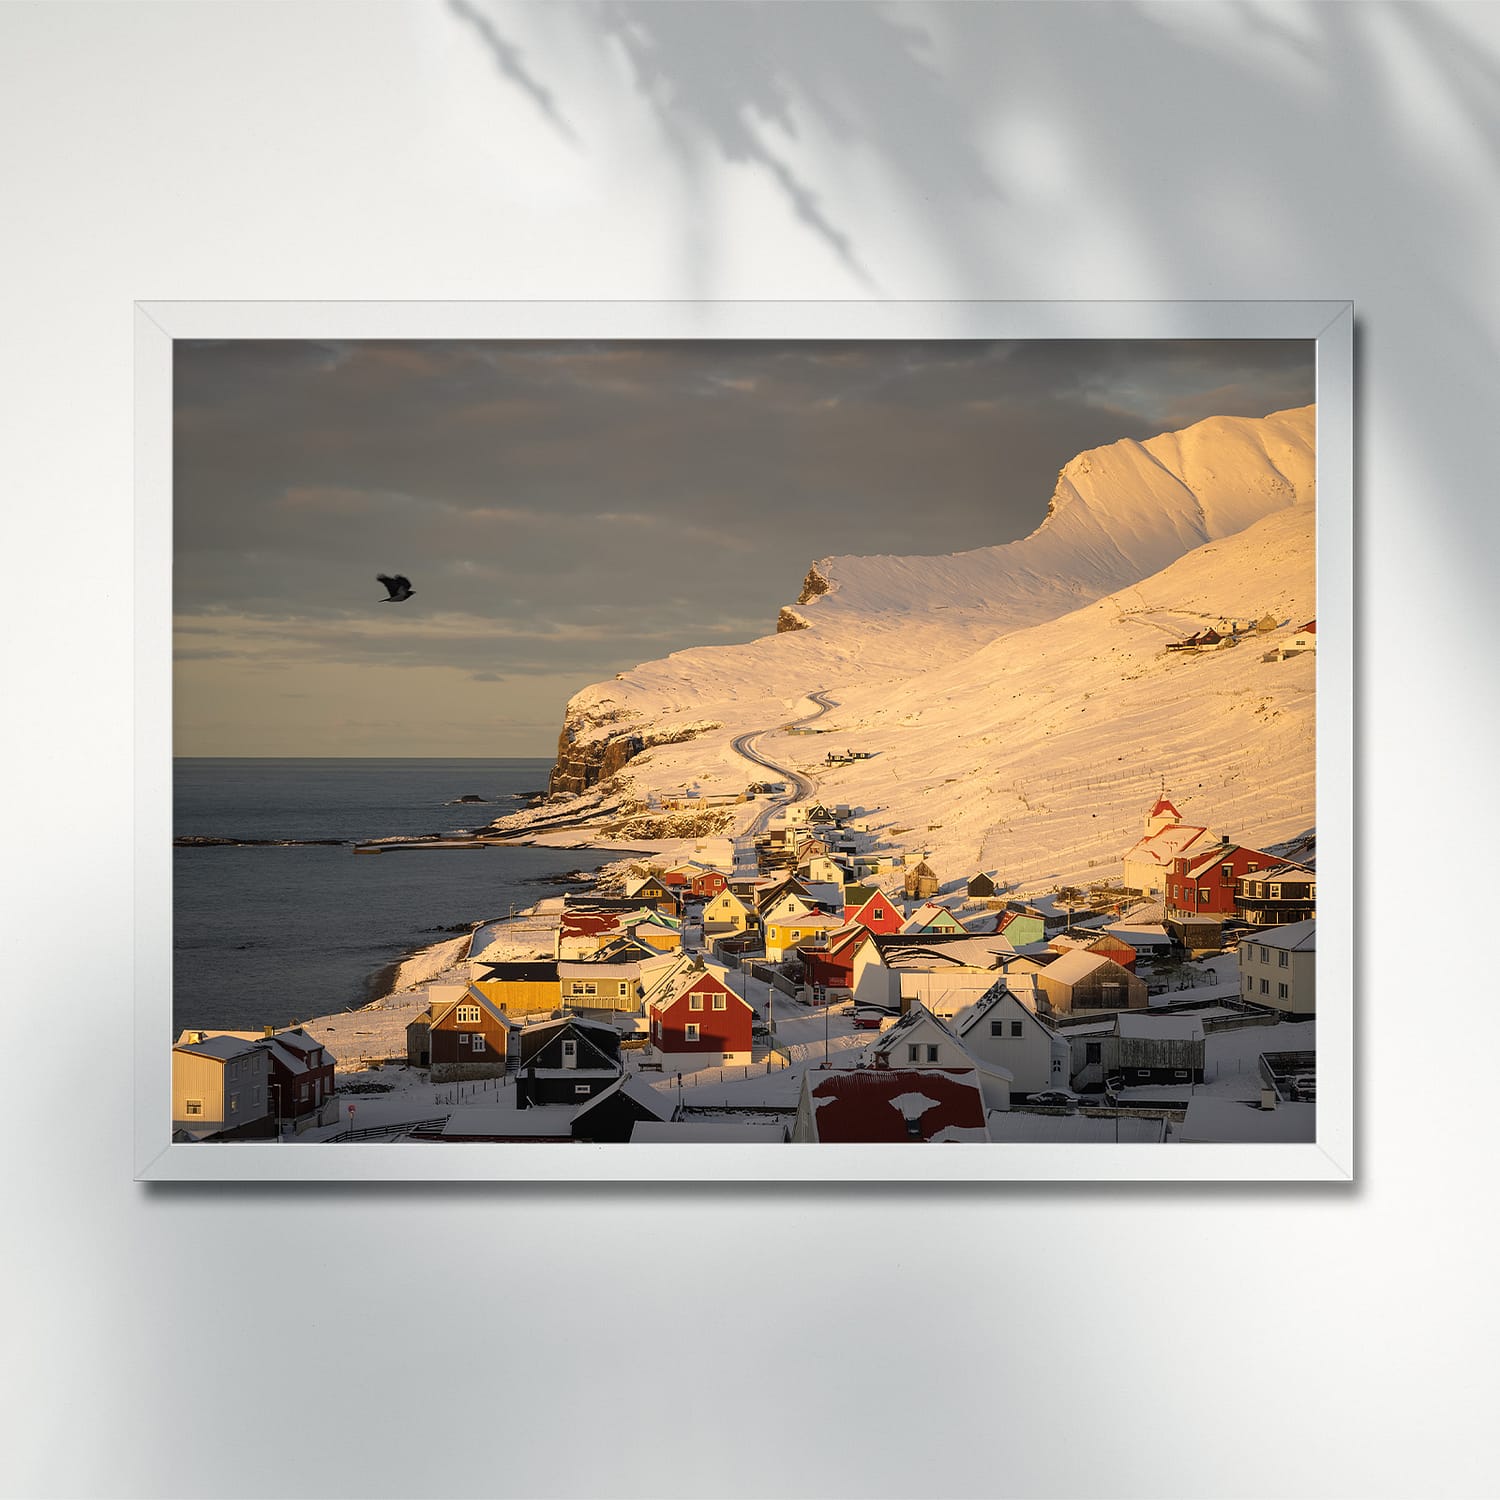 WINTER SUNRISE IN SUMBA, SUDUROY, FAROE ISLANDS - POSTER sumba village suduroy winter snow sunrise poster frame 9662